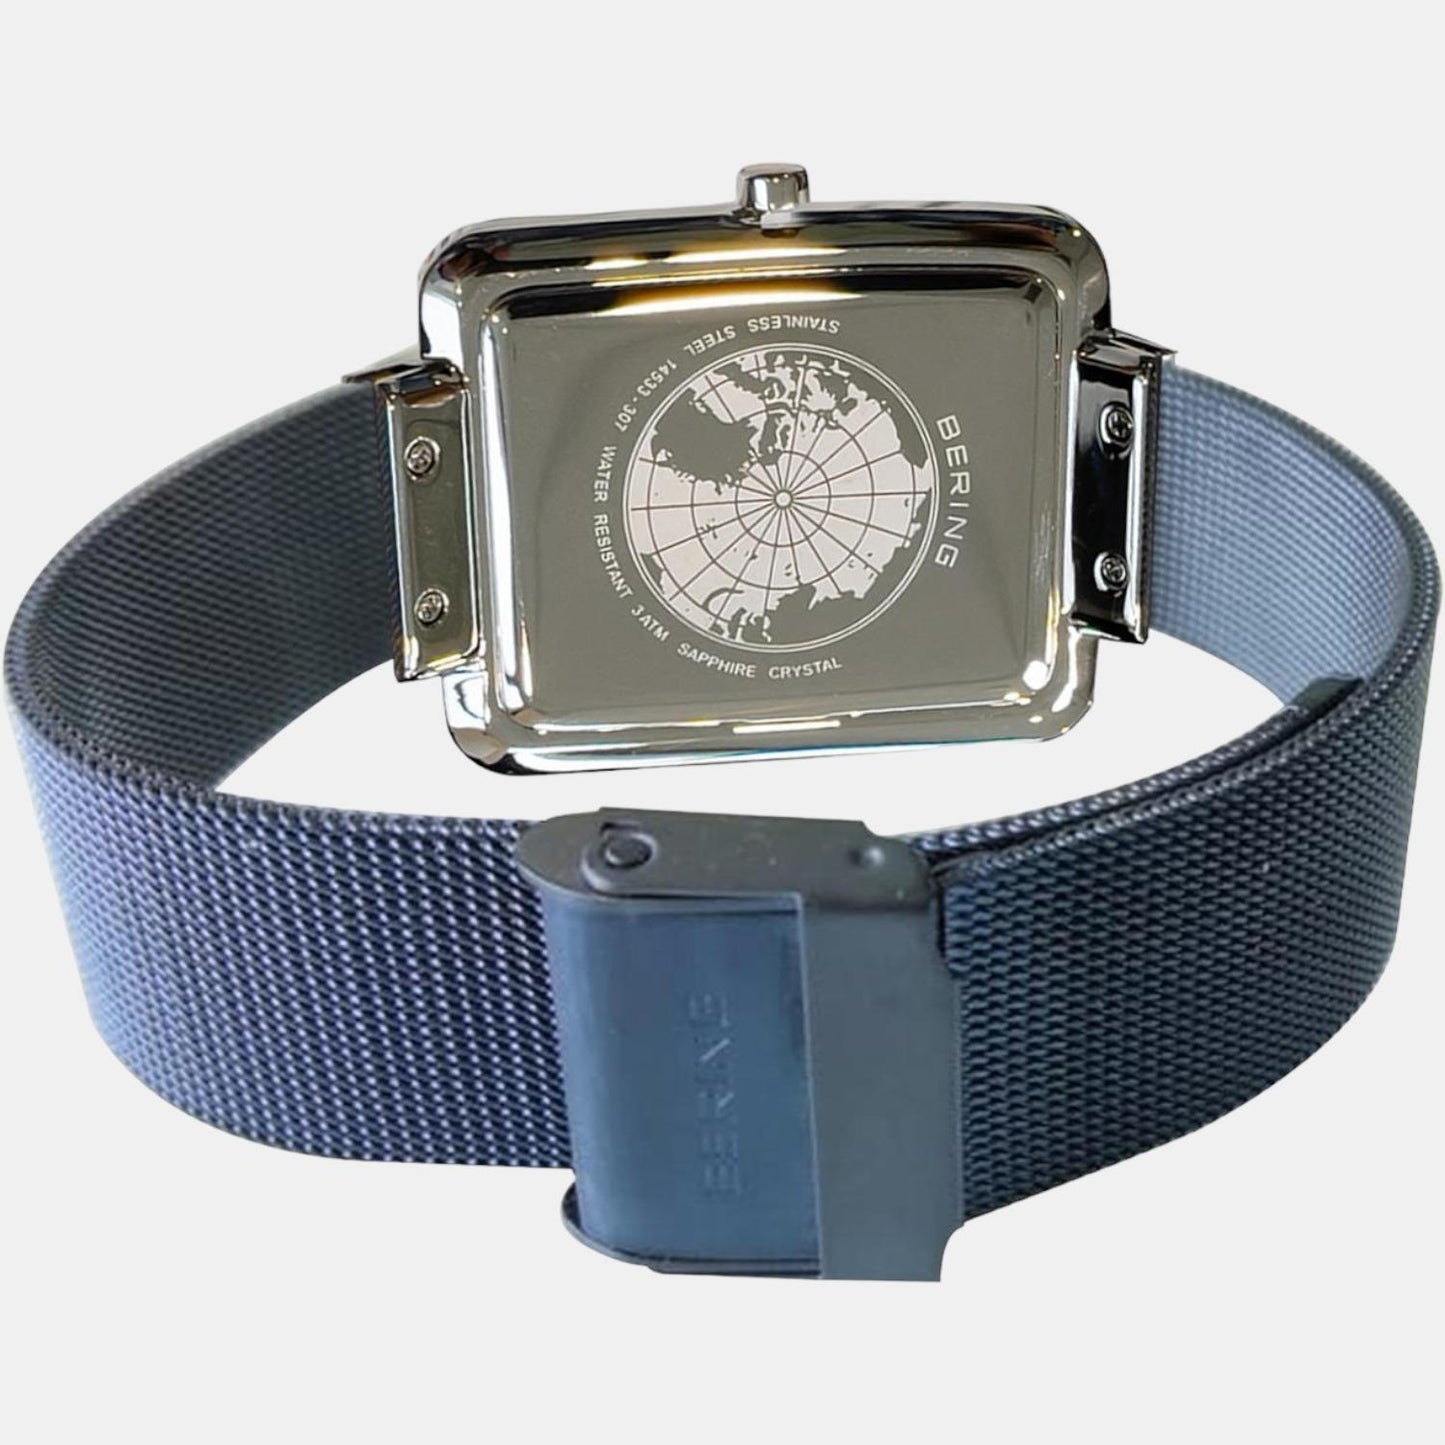 bering-stainless-steel-blue-analog-unisex-watch-14533-307